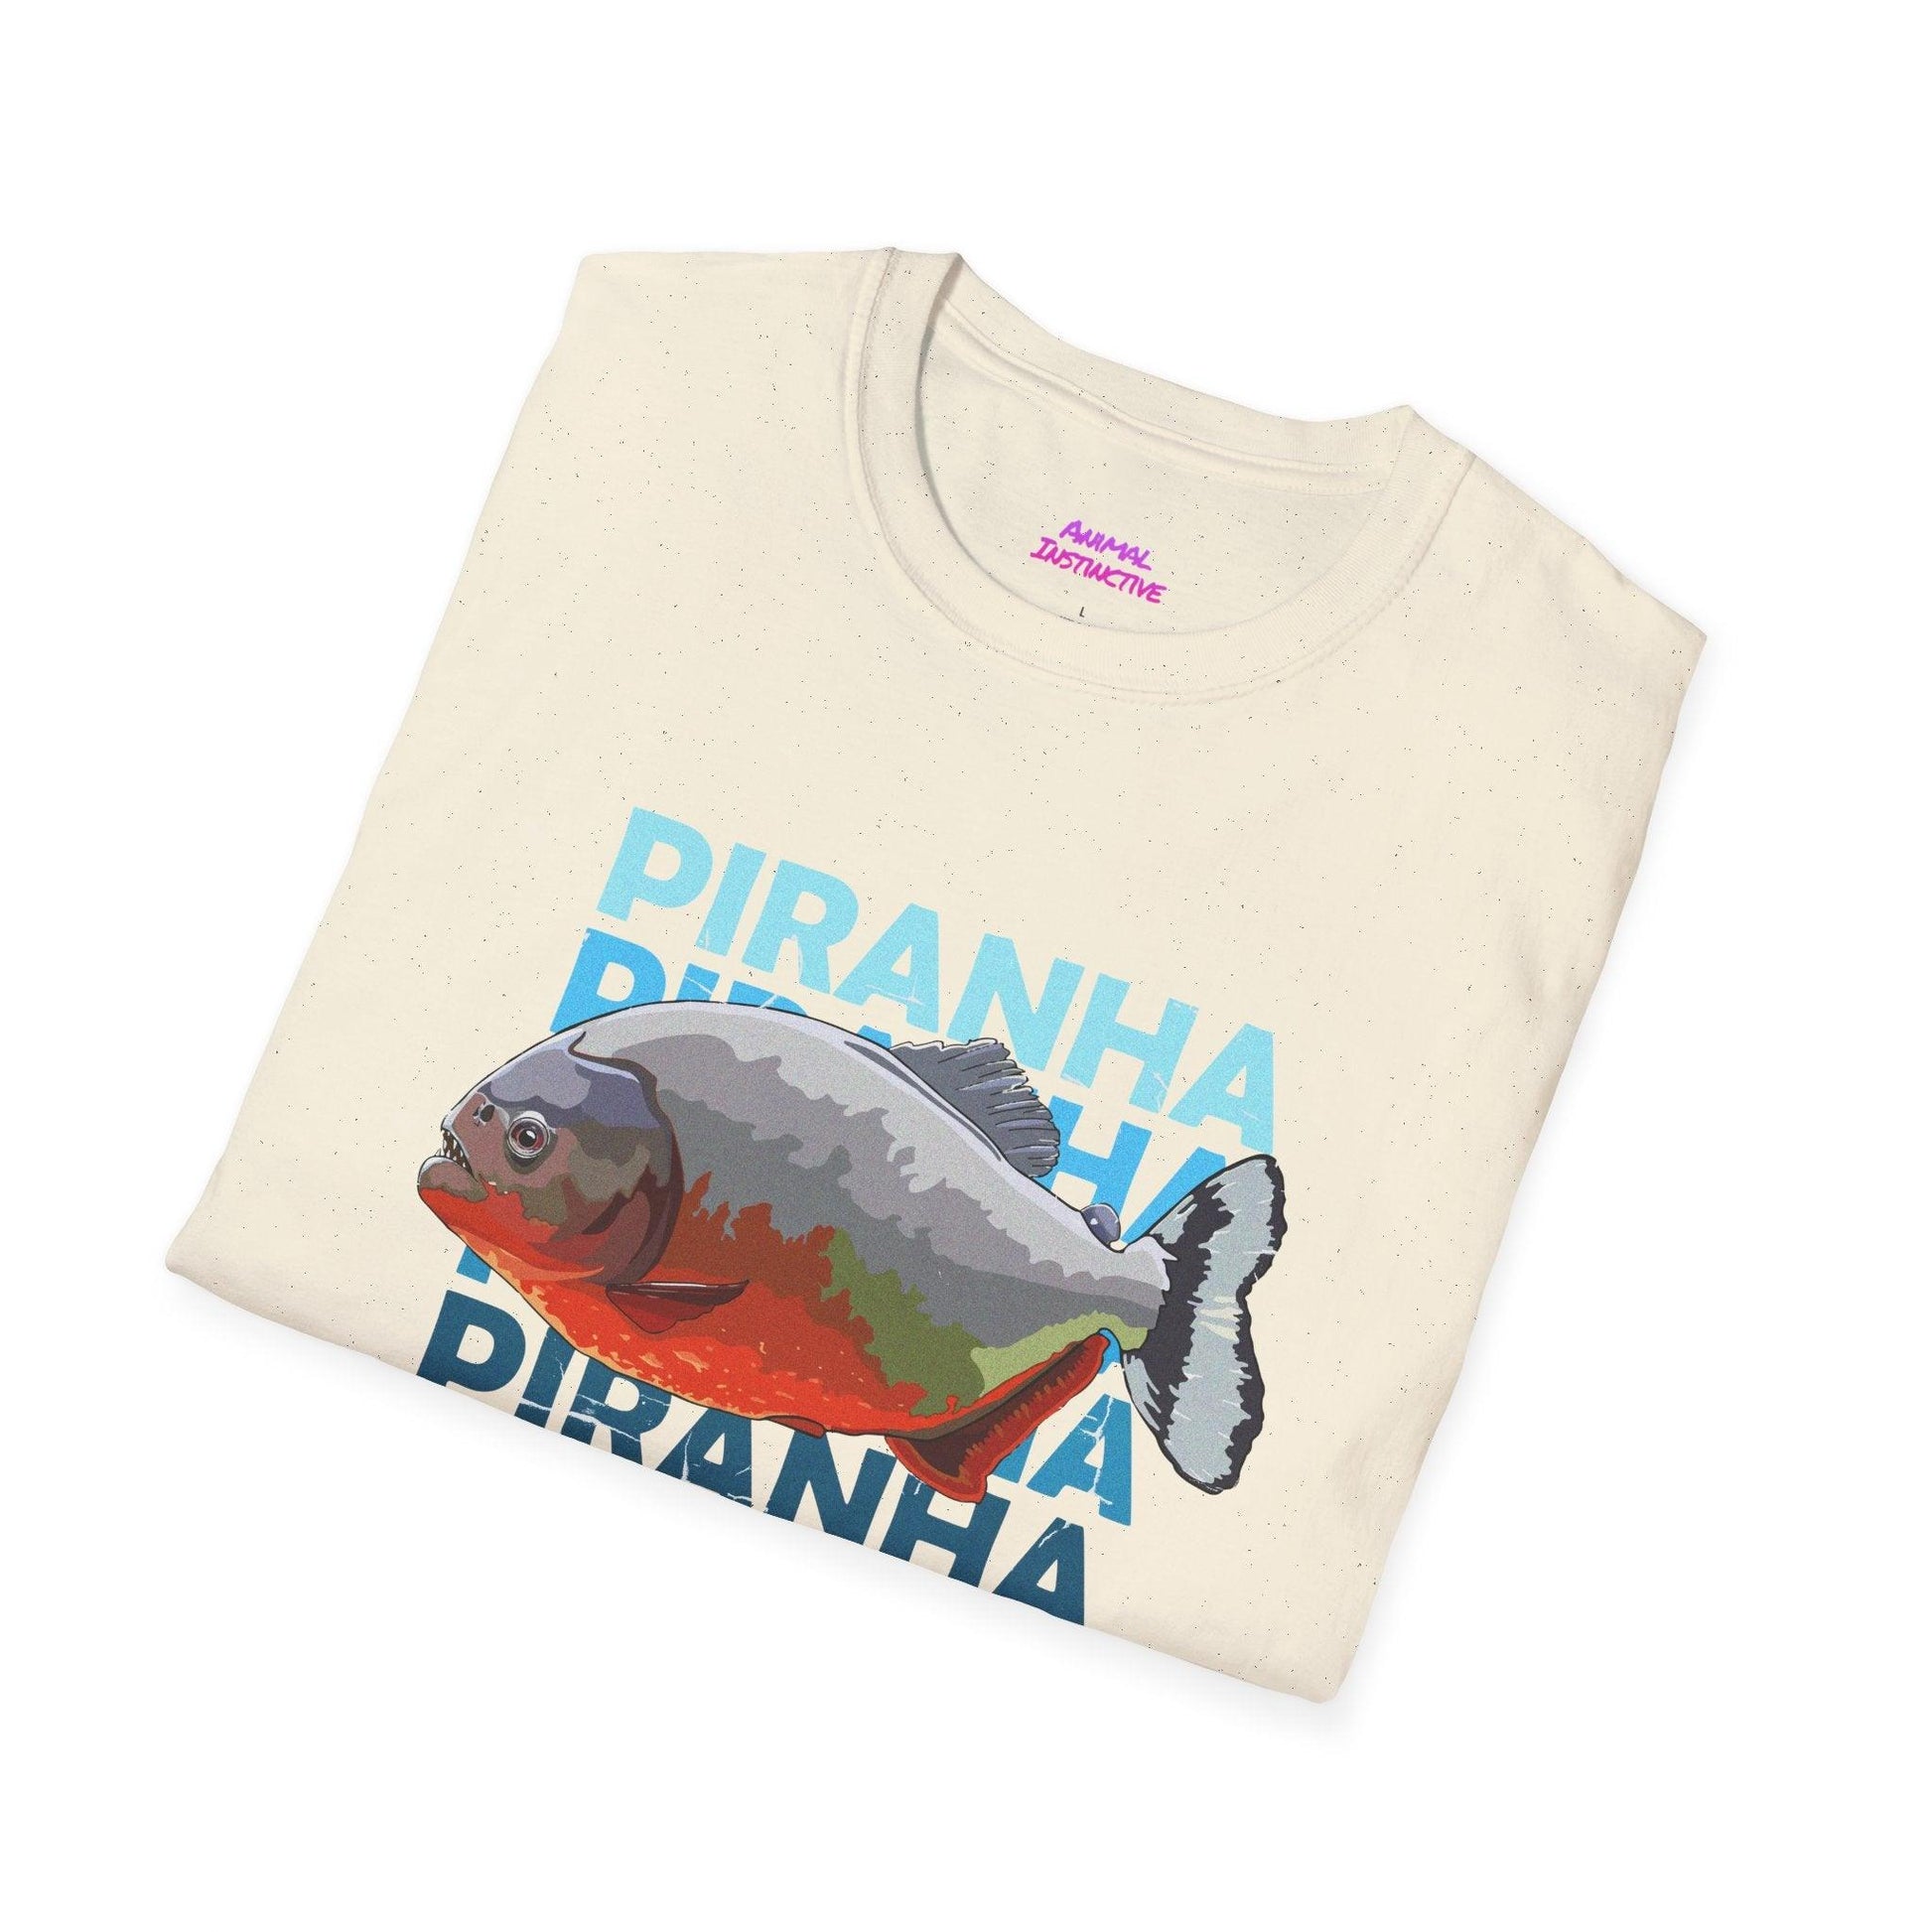 Amazon Piranha Multicolor Tropical Fish T-shirt - Animal Instinctive